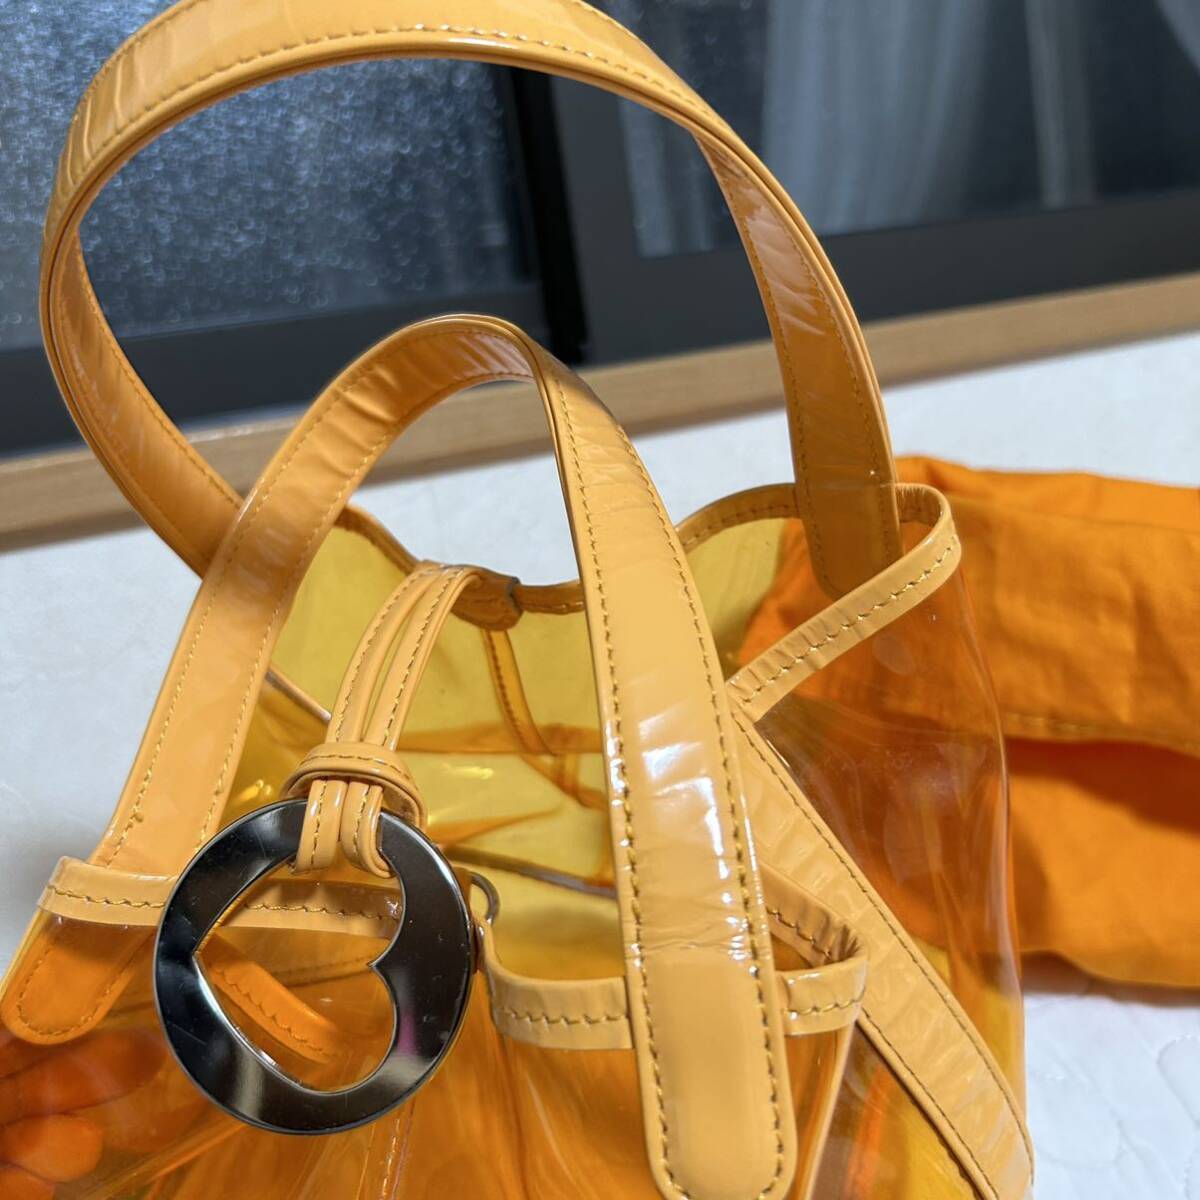  б/у Diana ручная сумочка натуральная кожа большая сумка 